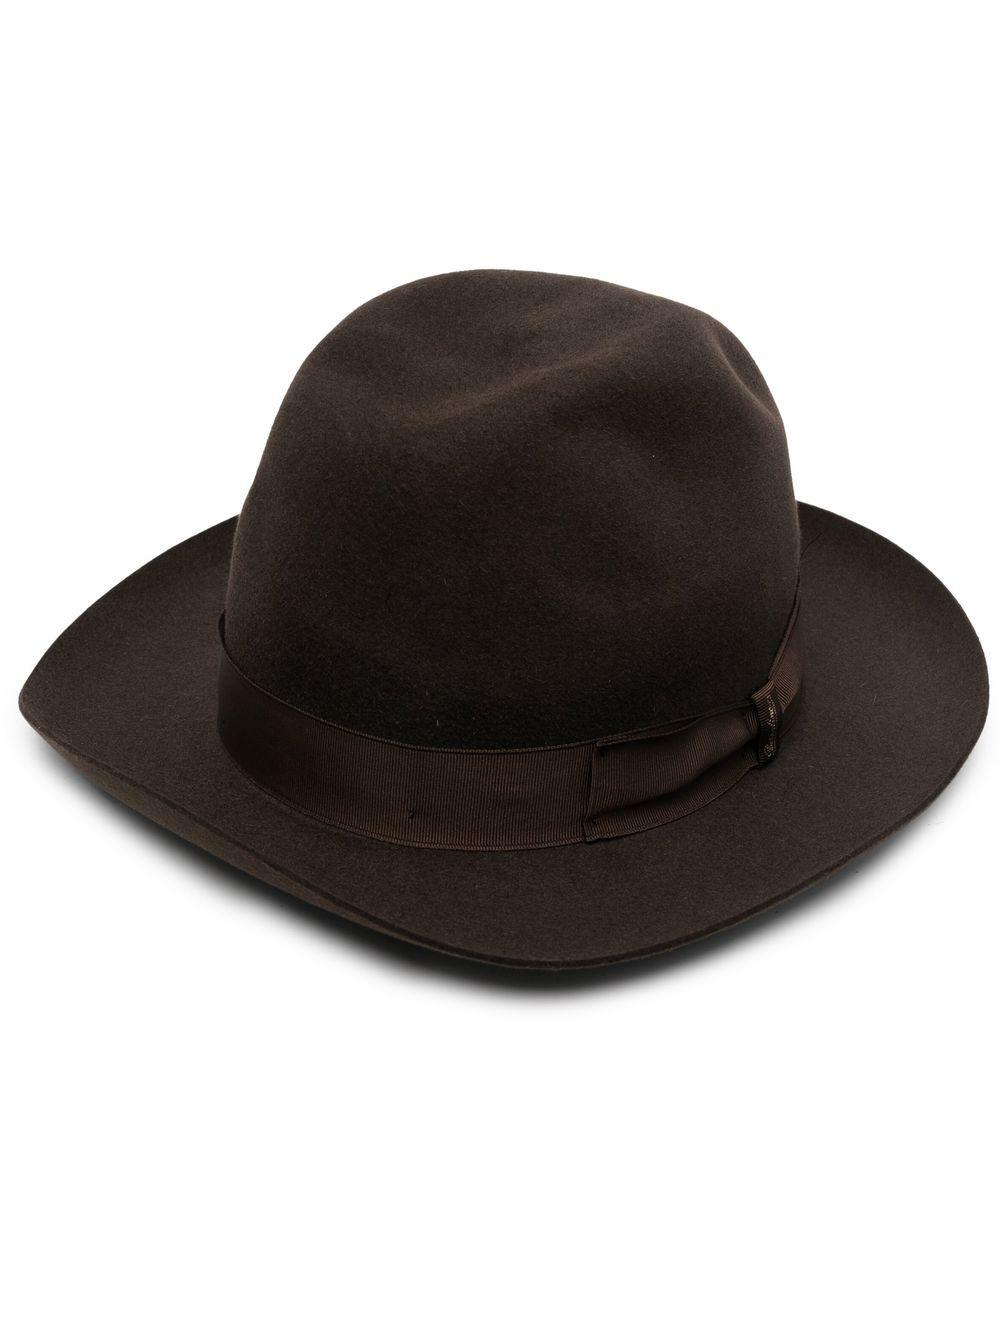 Borsalino Suede Hat in Black for Men | Lyst